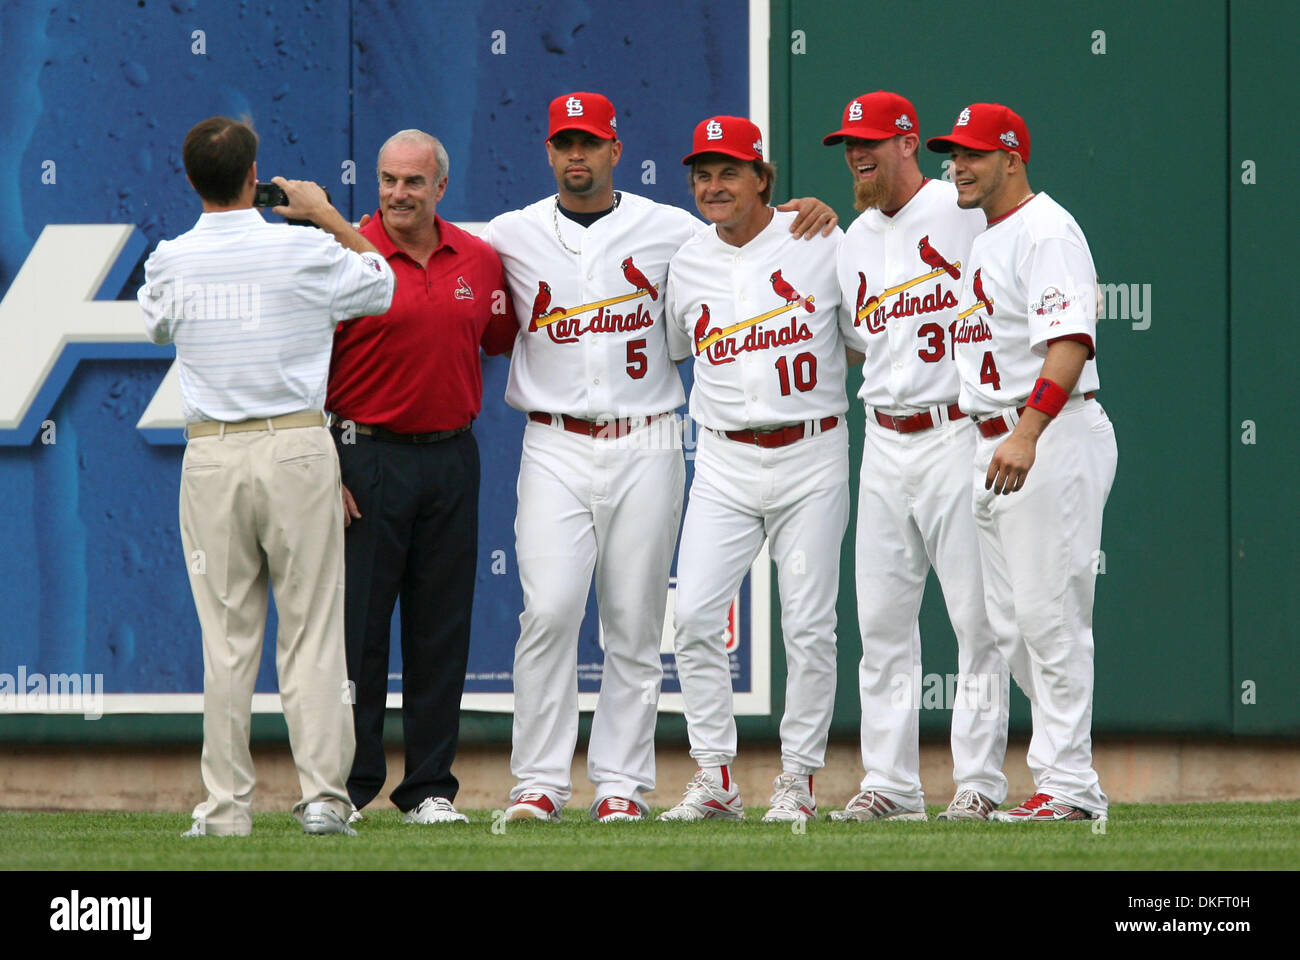 Jul 14, 2009 - St. Louis, Missouri, USA - Members of the Cardinals